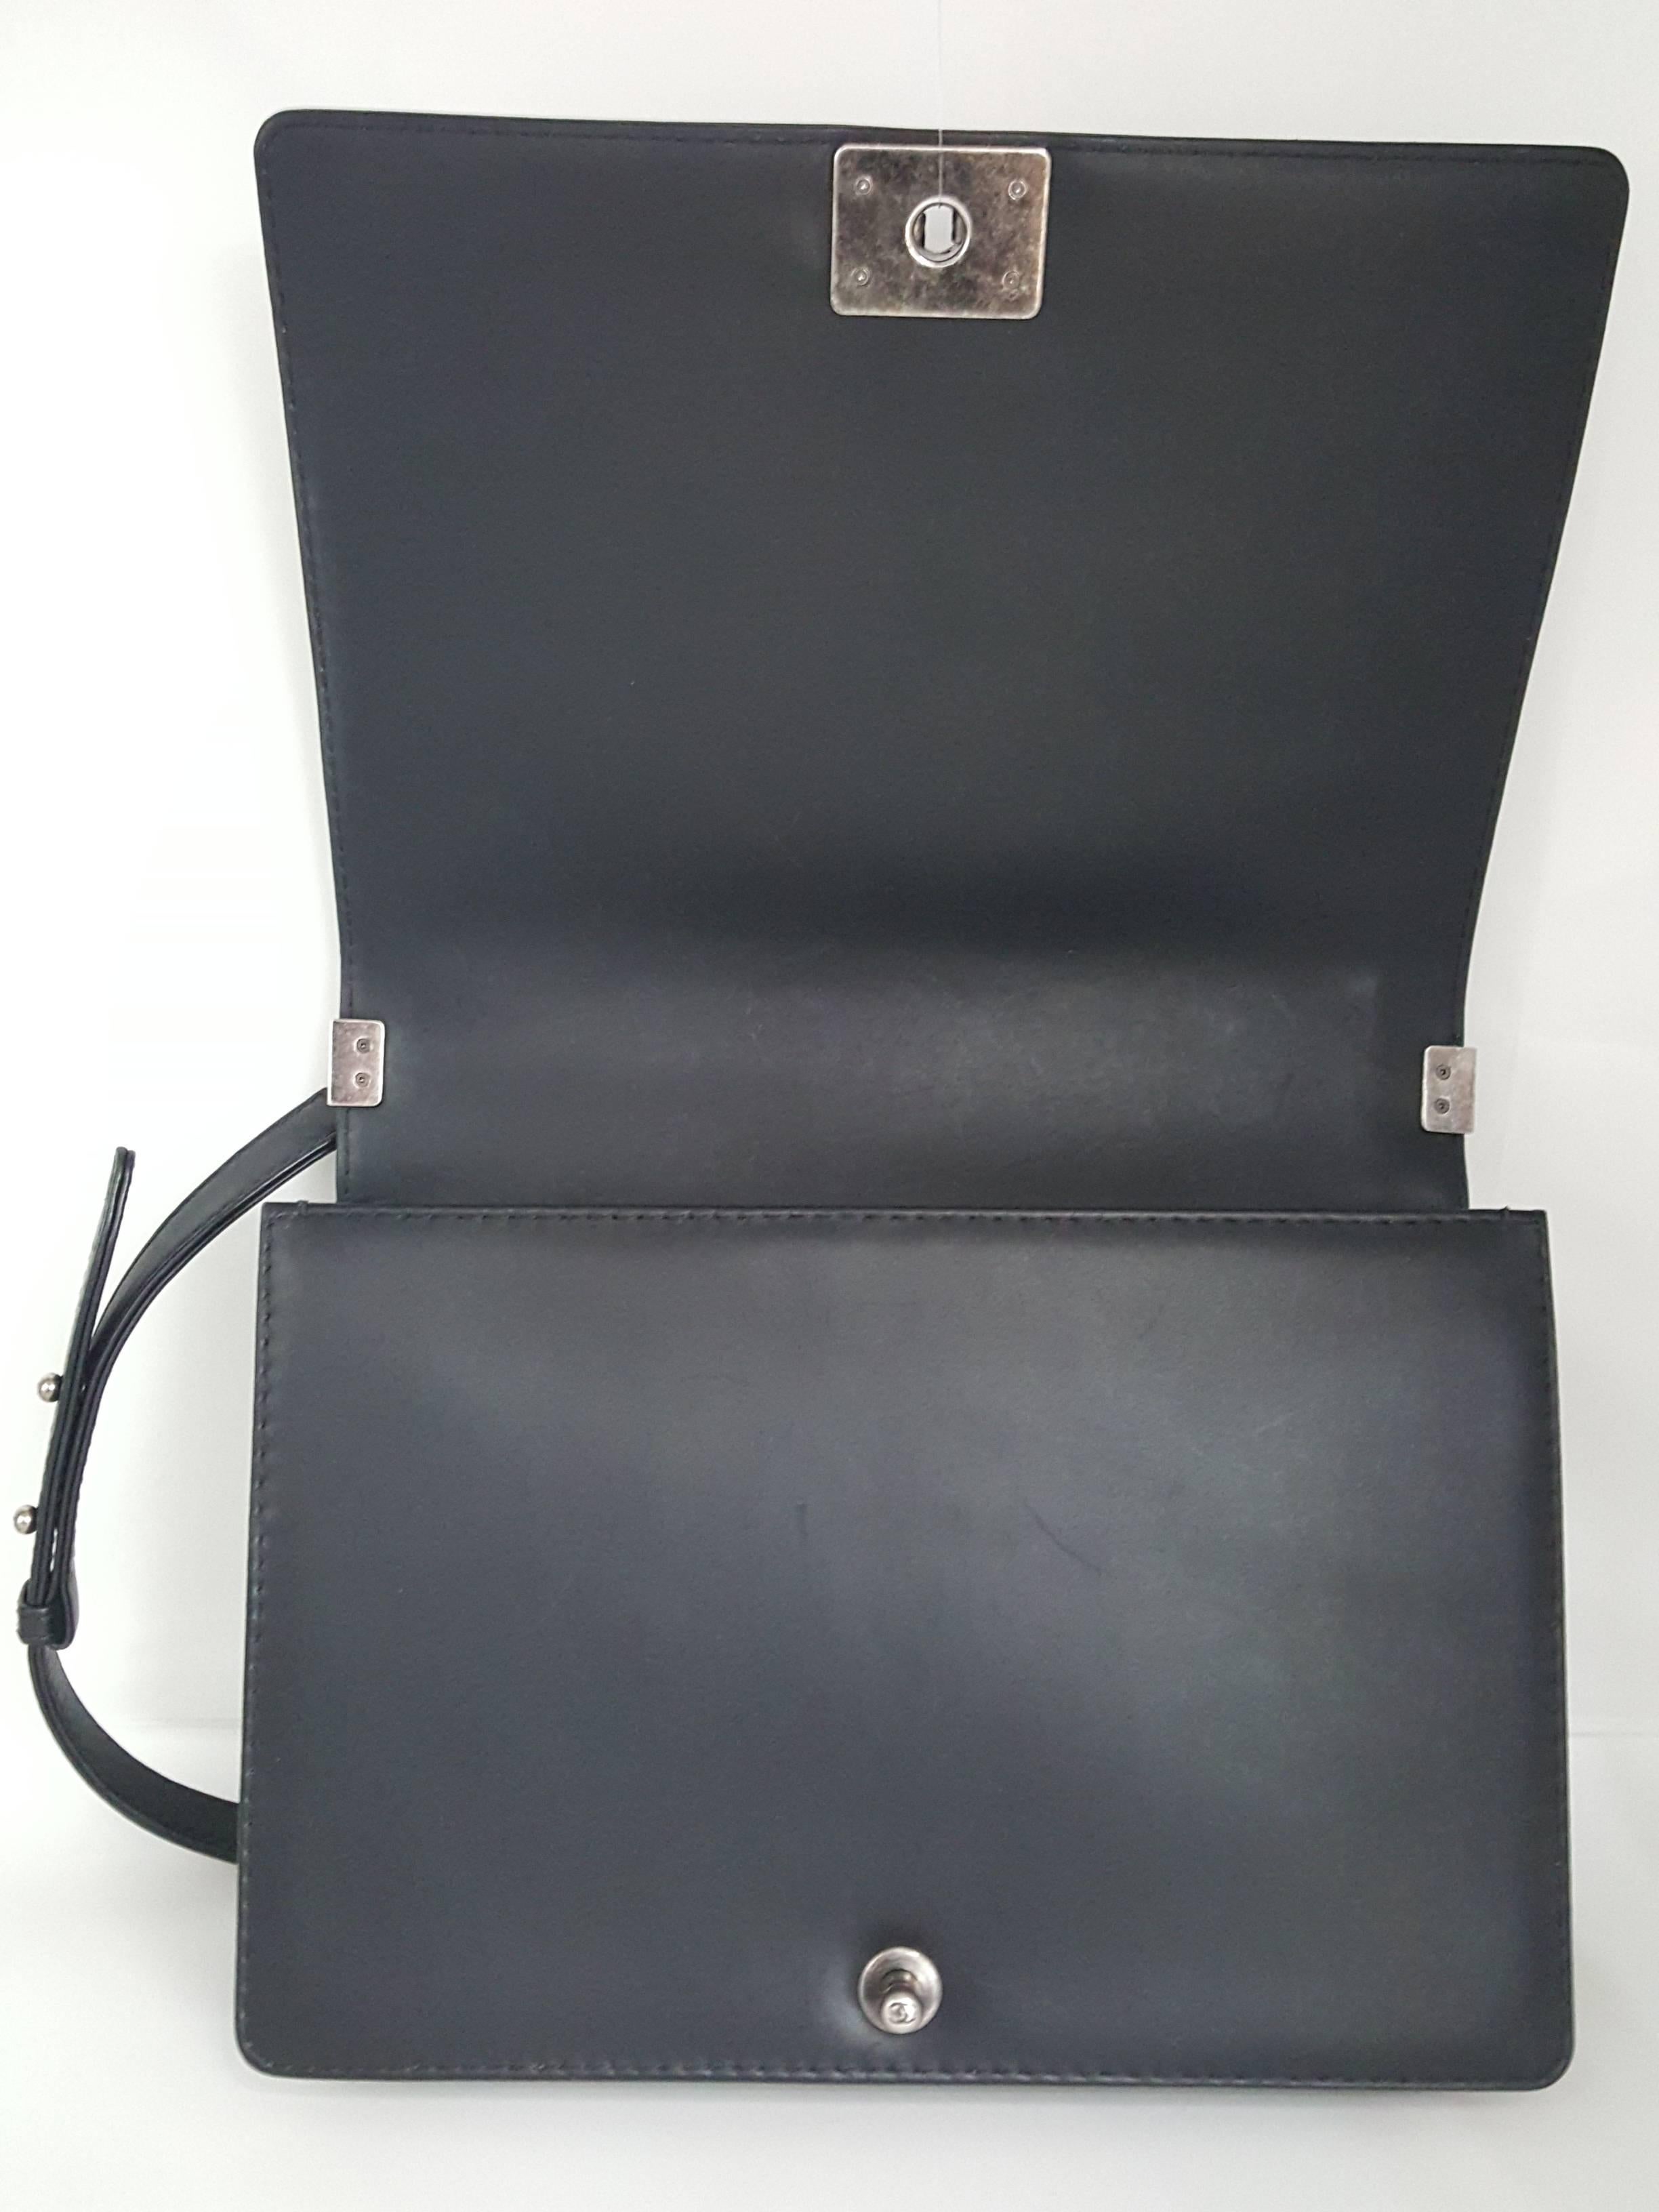 Chanel Medium Boy Bag In Black Goat Skin And Darkened Silver Hardware 12